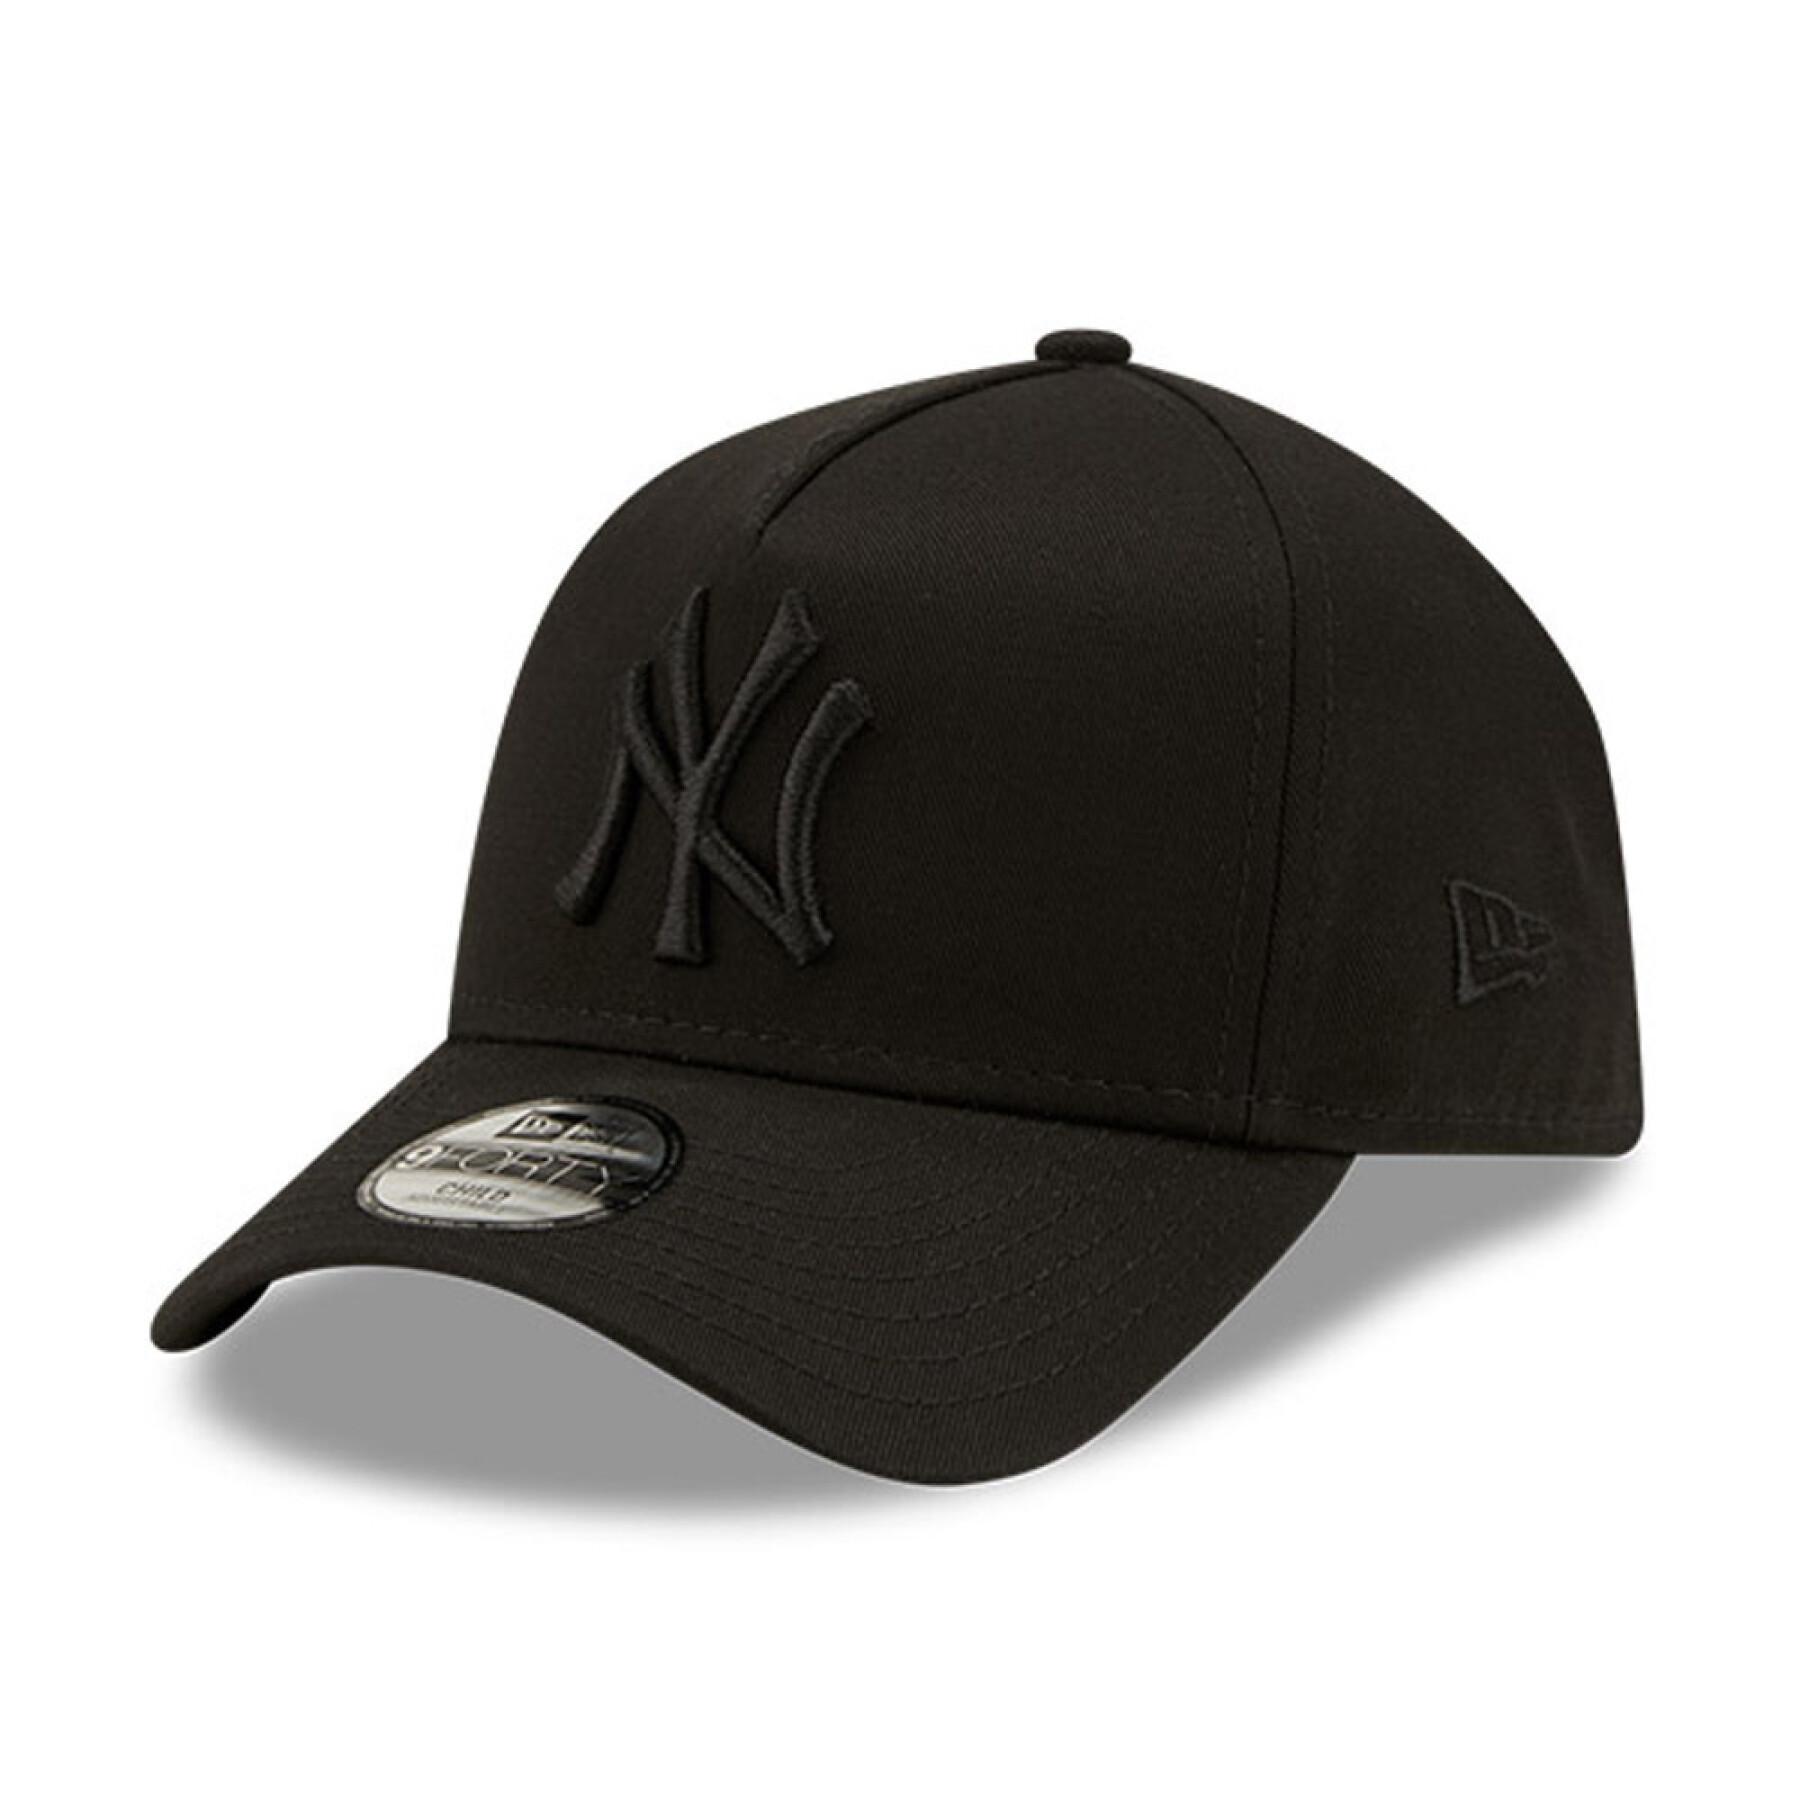 Gorra para niños New York Yankees colour essential